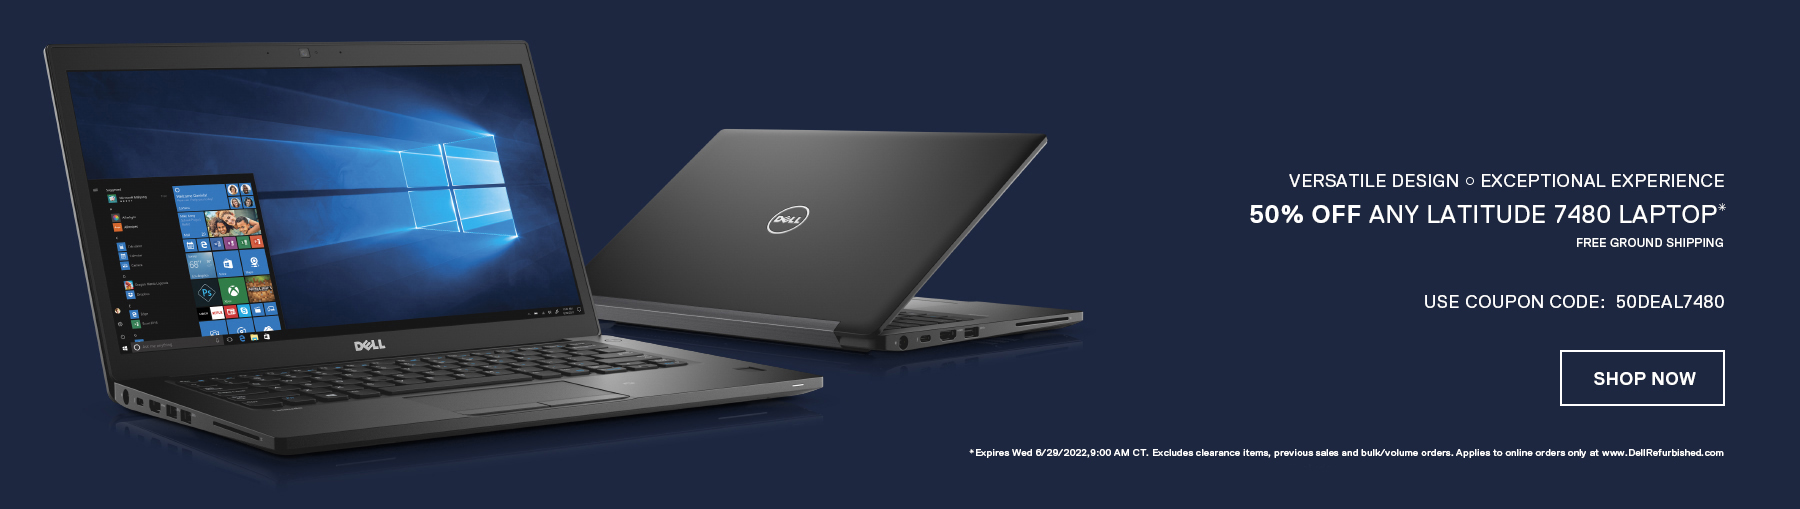 Dell Latitude 7480 Laptops on sale